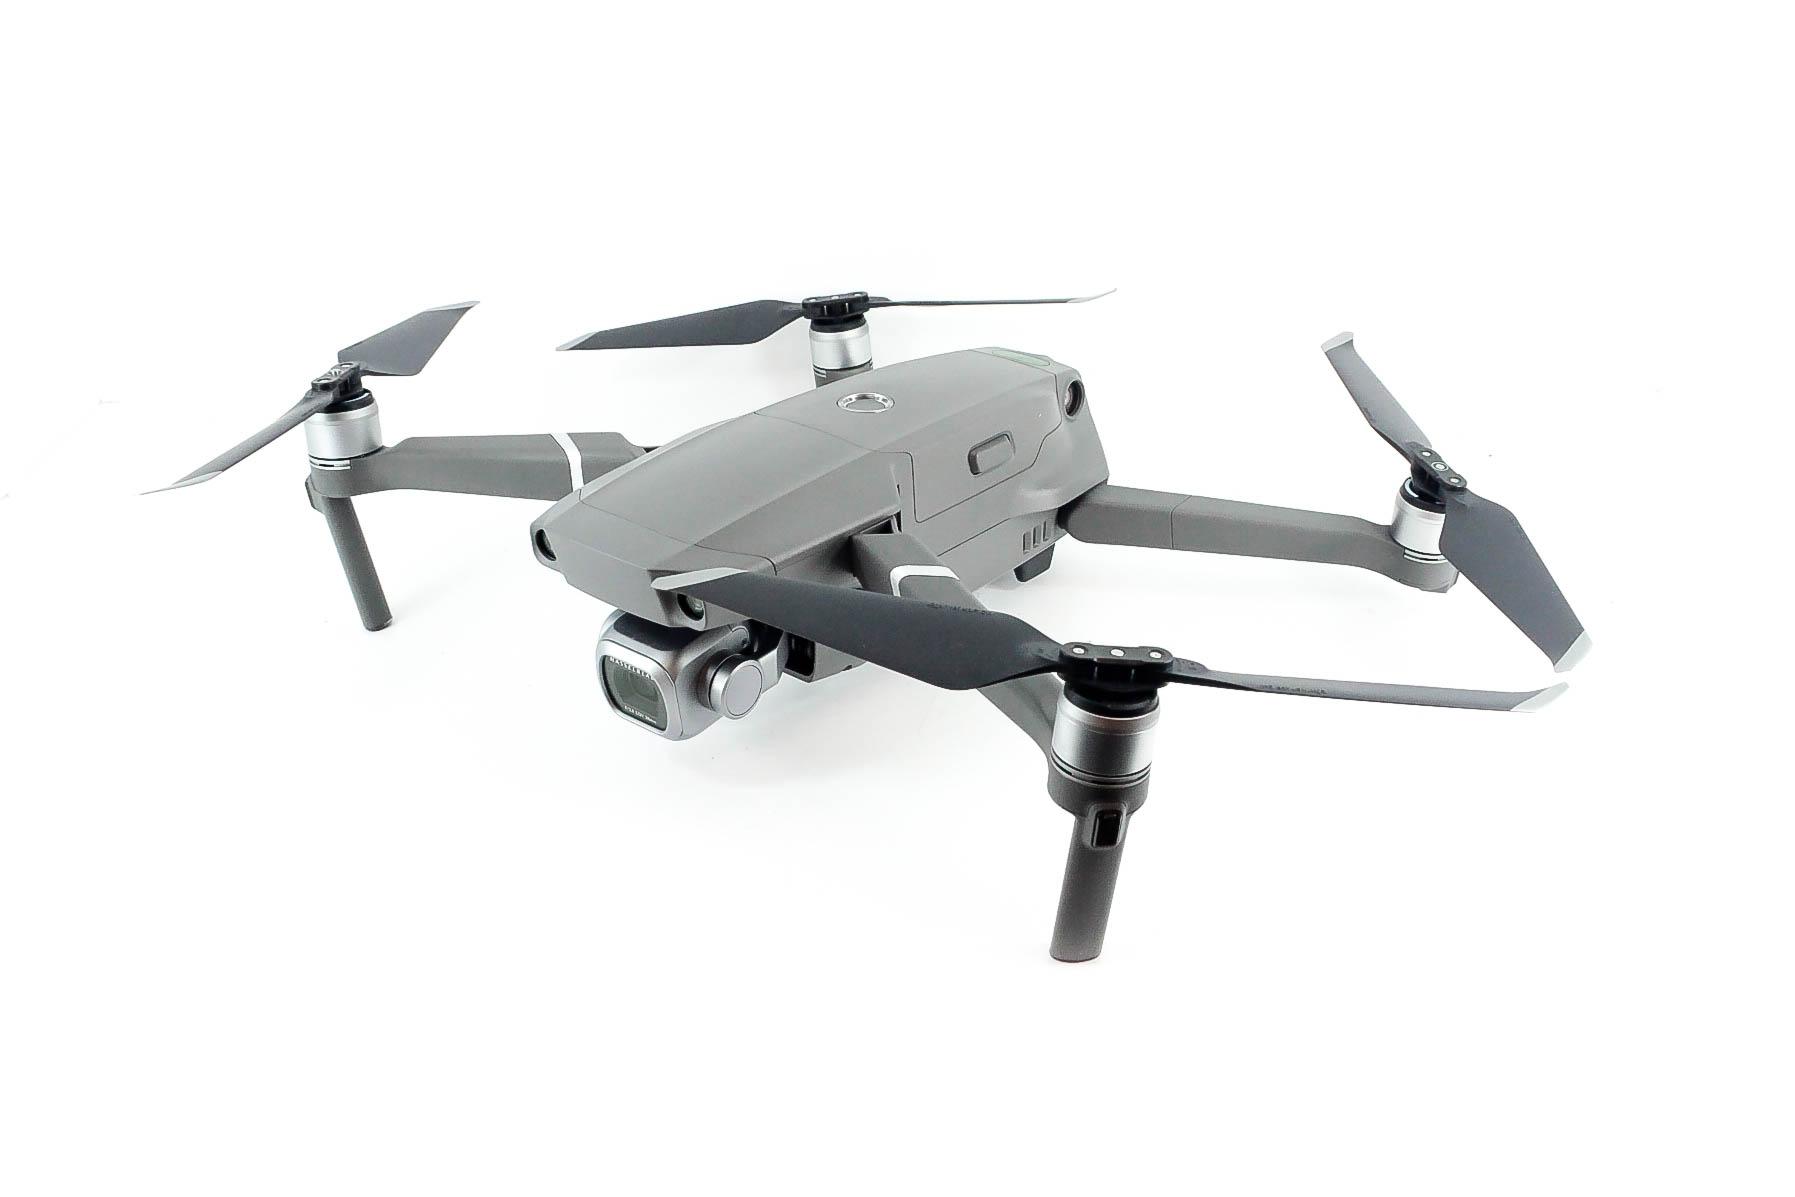 DJI Phantom 4 Pro used for drone aerial filming